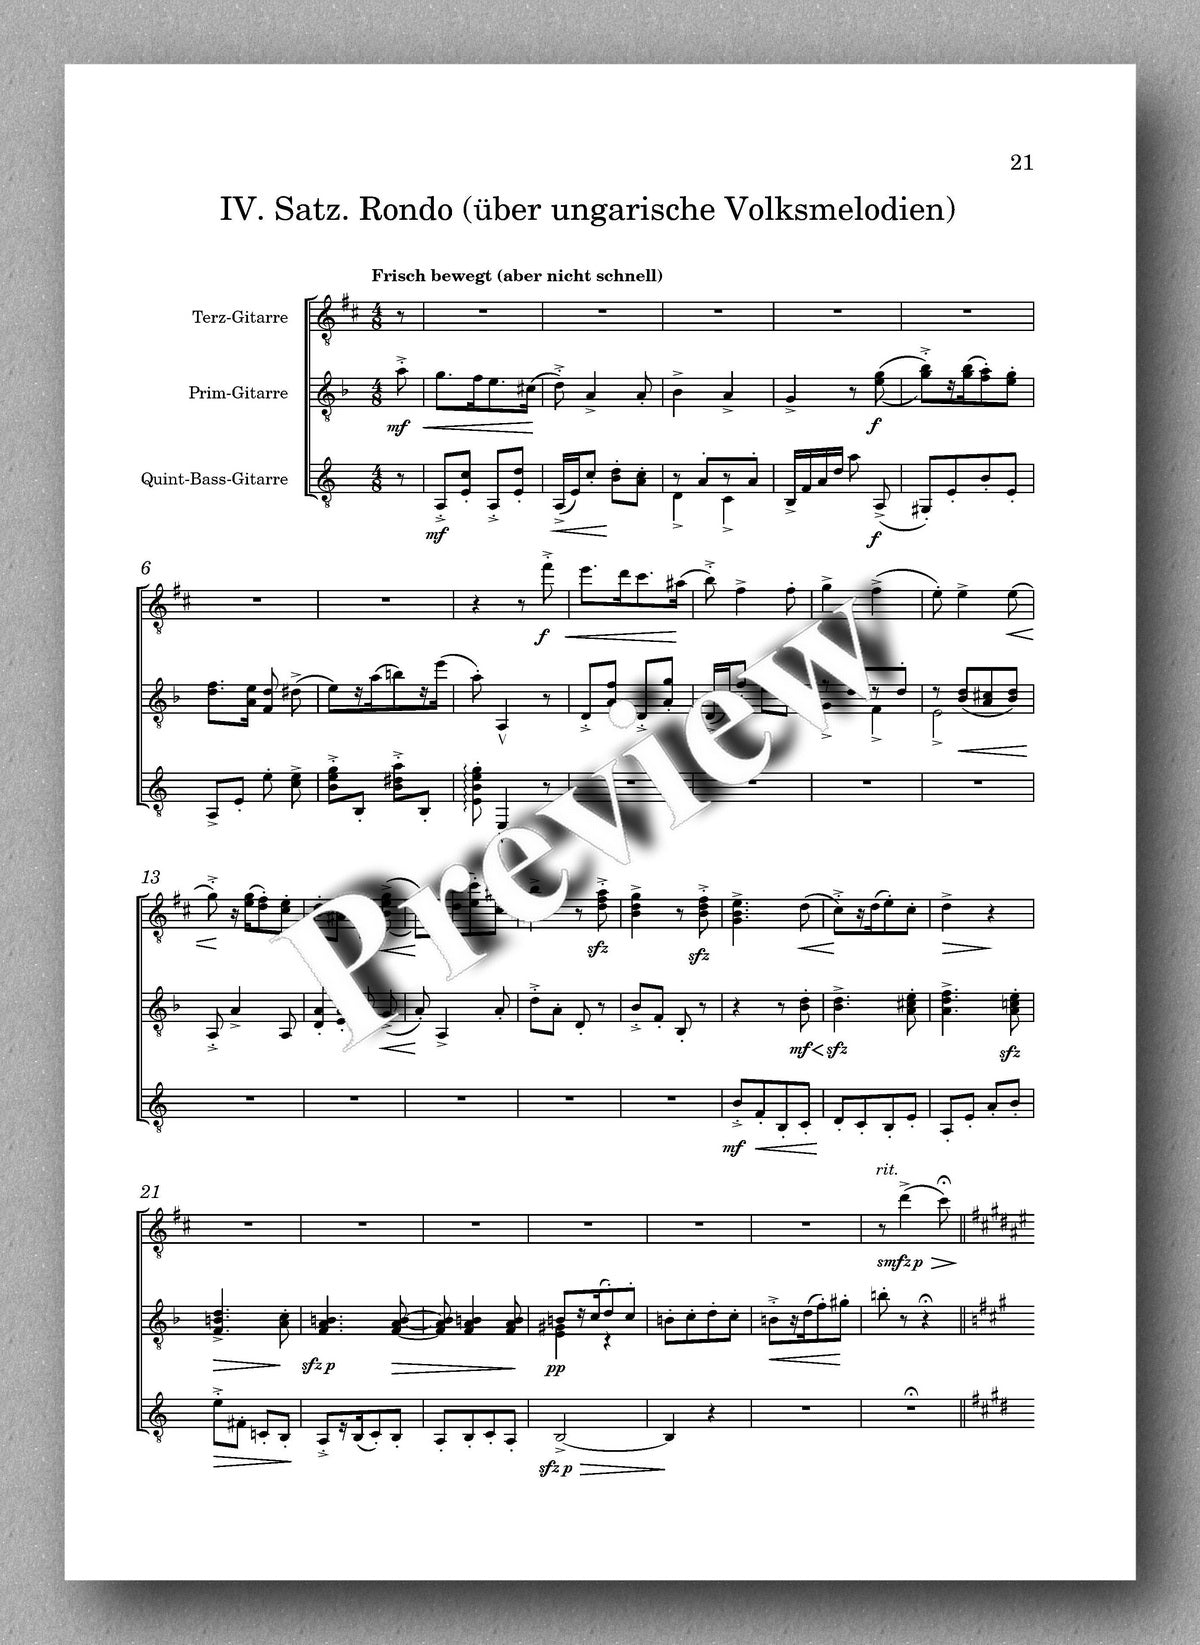 Rebay [167], Trio - music score 4